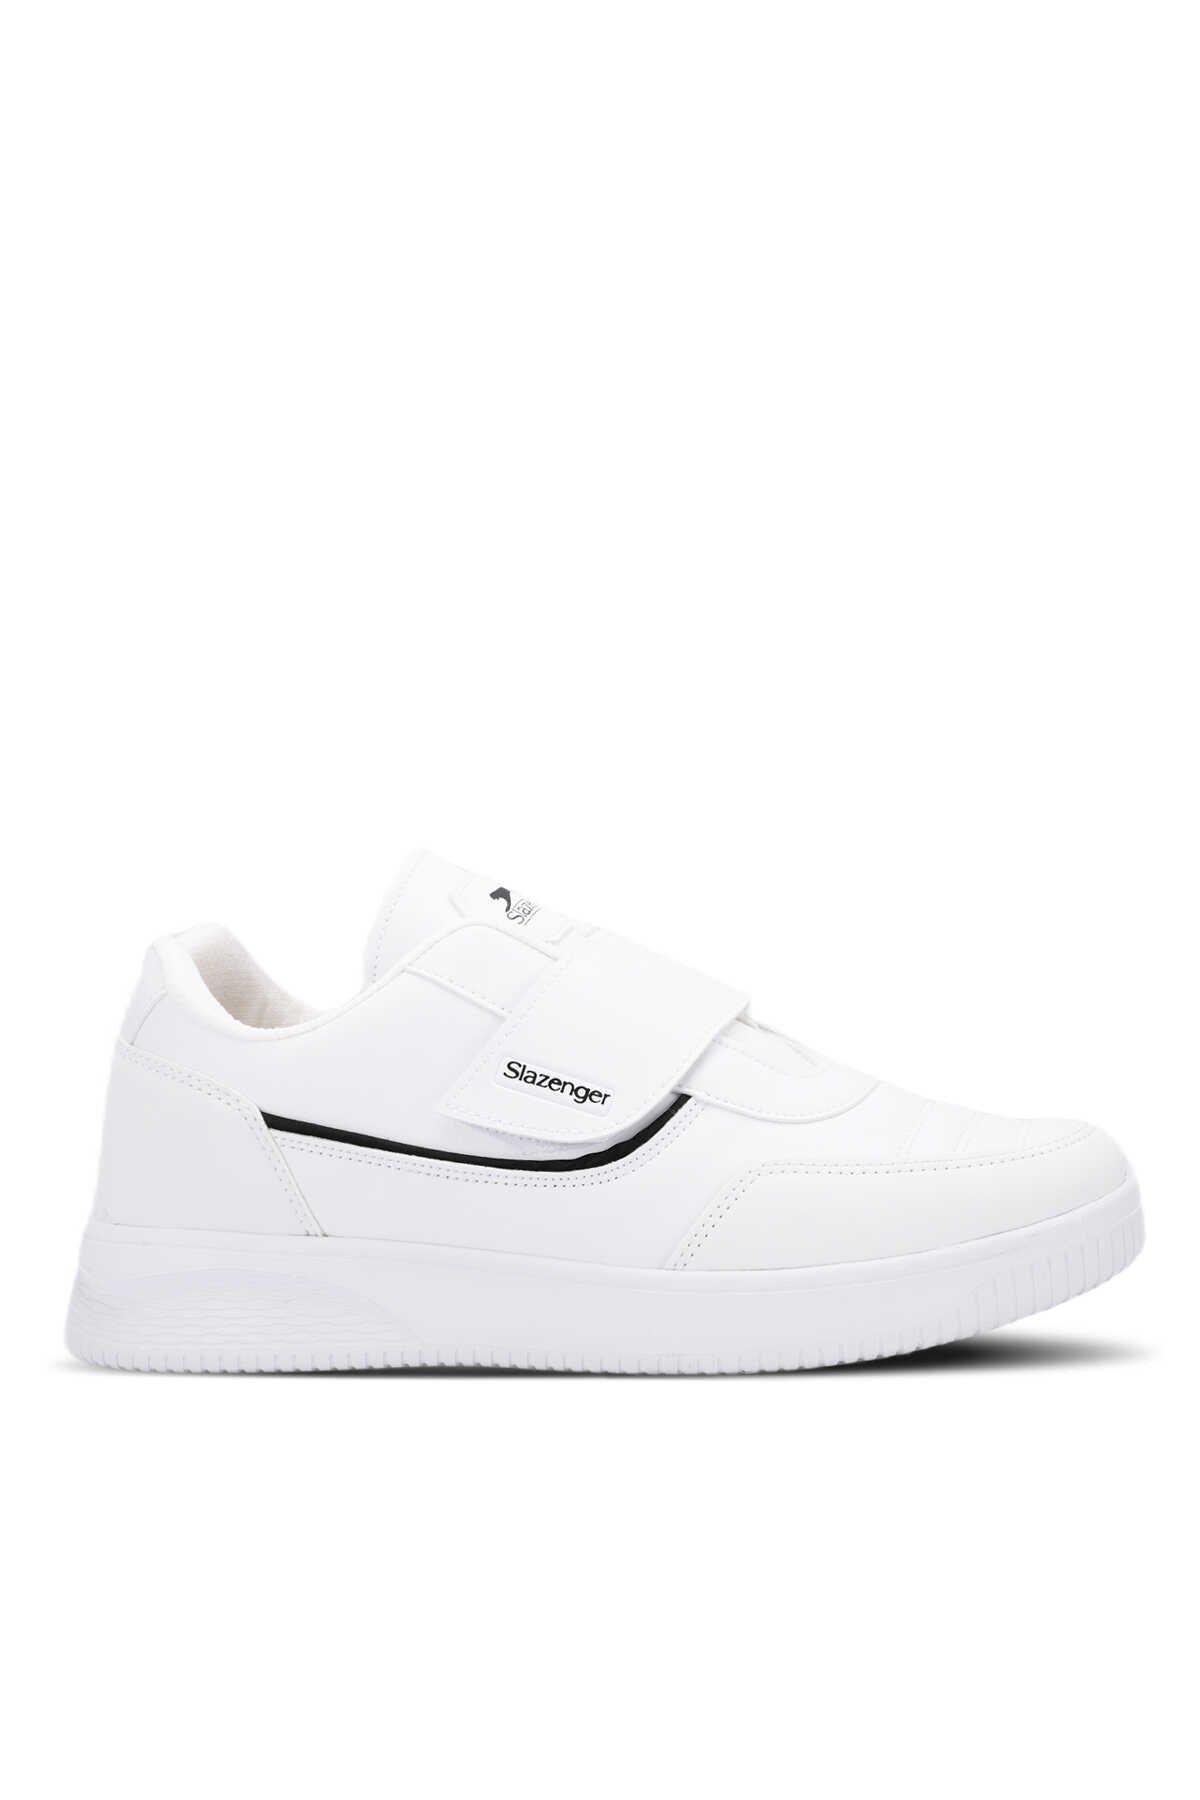 Slazenger - Slazenger MALL I Sneaker Erkek Ayakkabı Beyaz